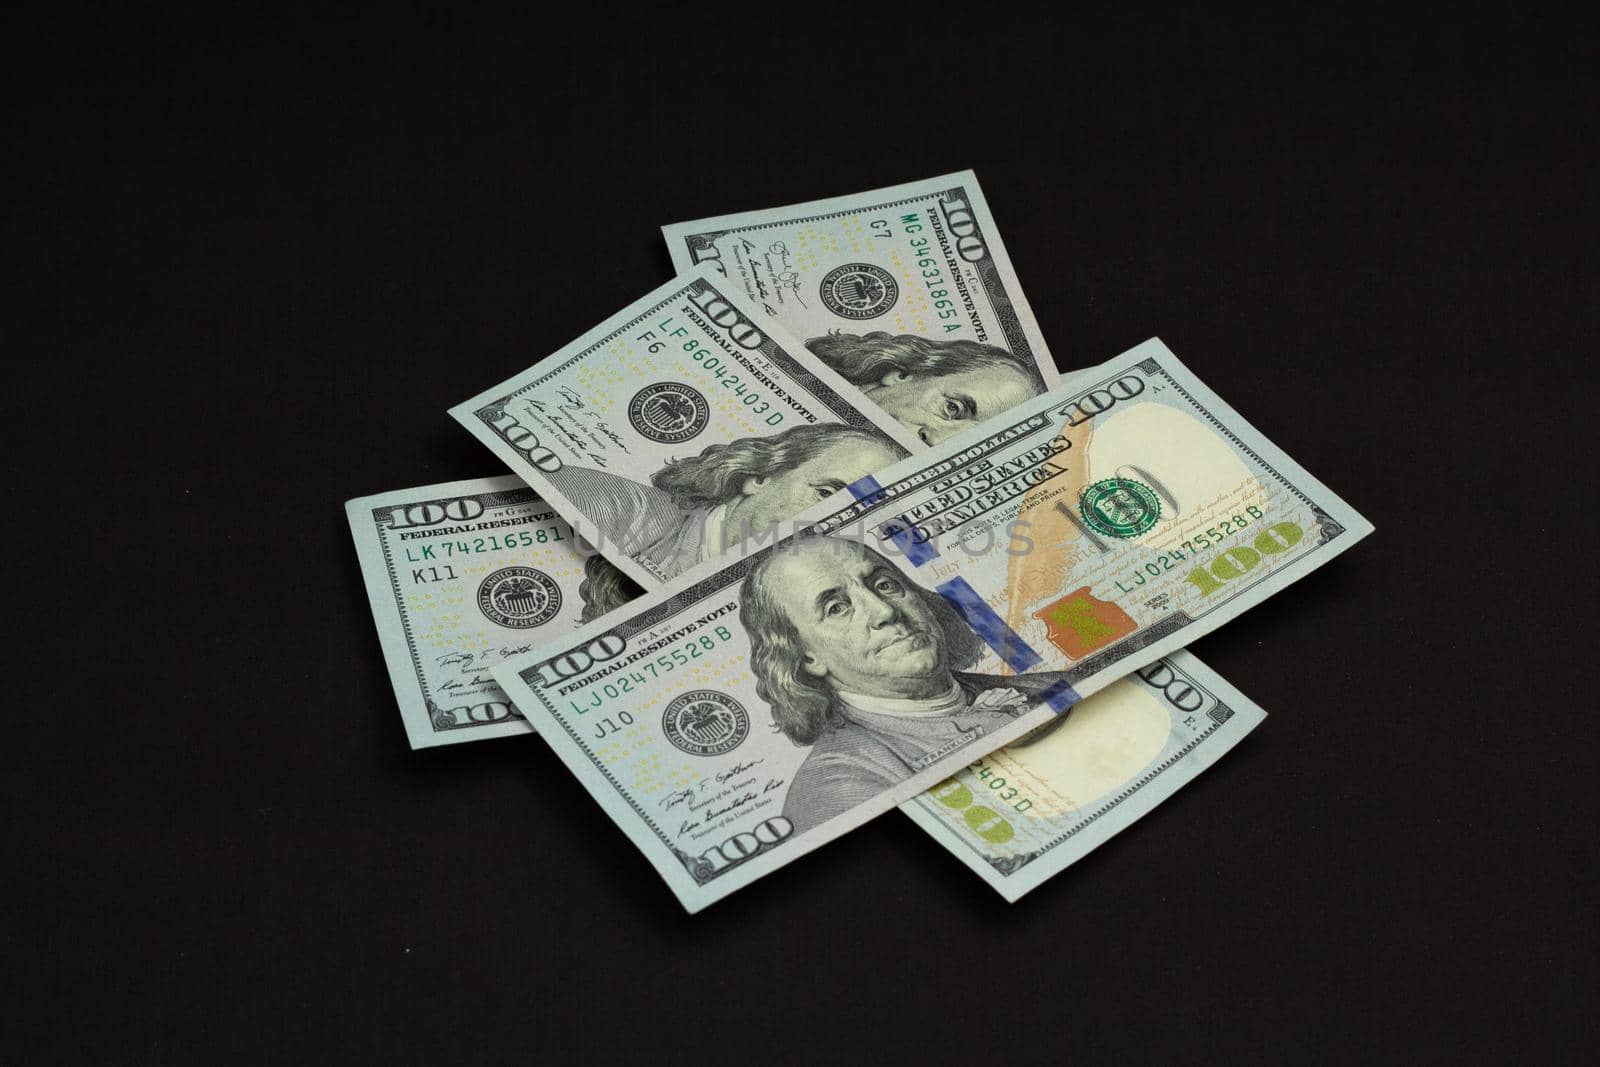 American cash money, banknotes four hundred us dollars on black background, one hundred dollar bills in stack